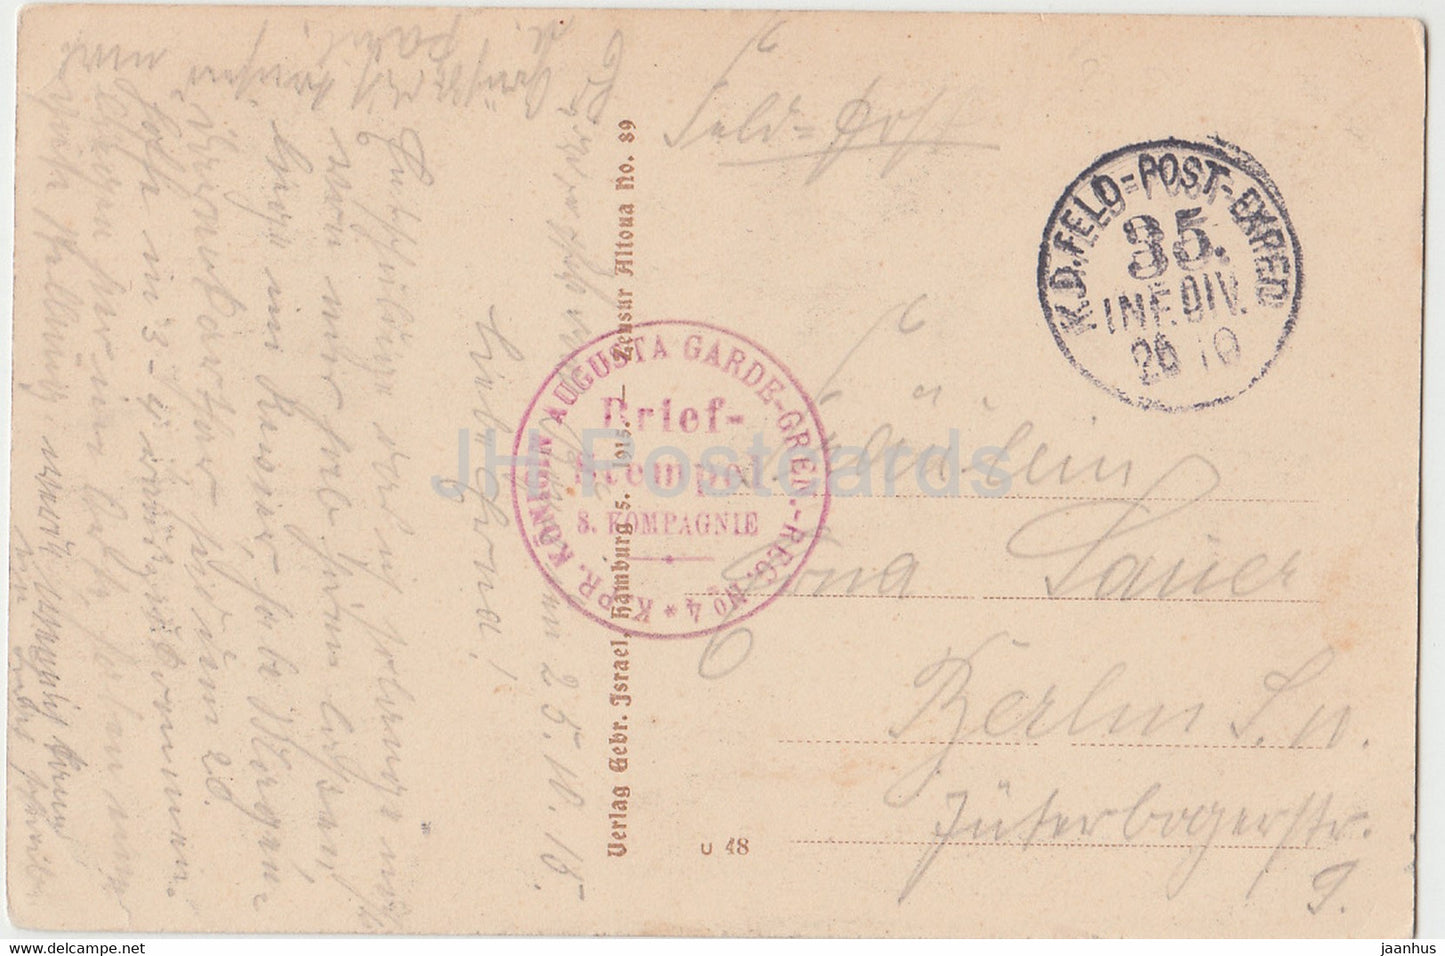 Kirche St Pierre Roye - Konigin Augusta Garde Gren Reg No 4 - Feldpost - old postcard - 1915 - France - used